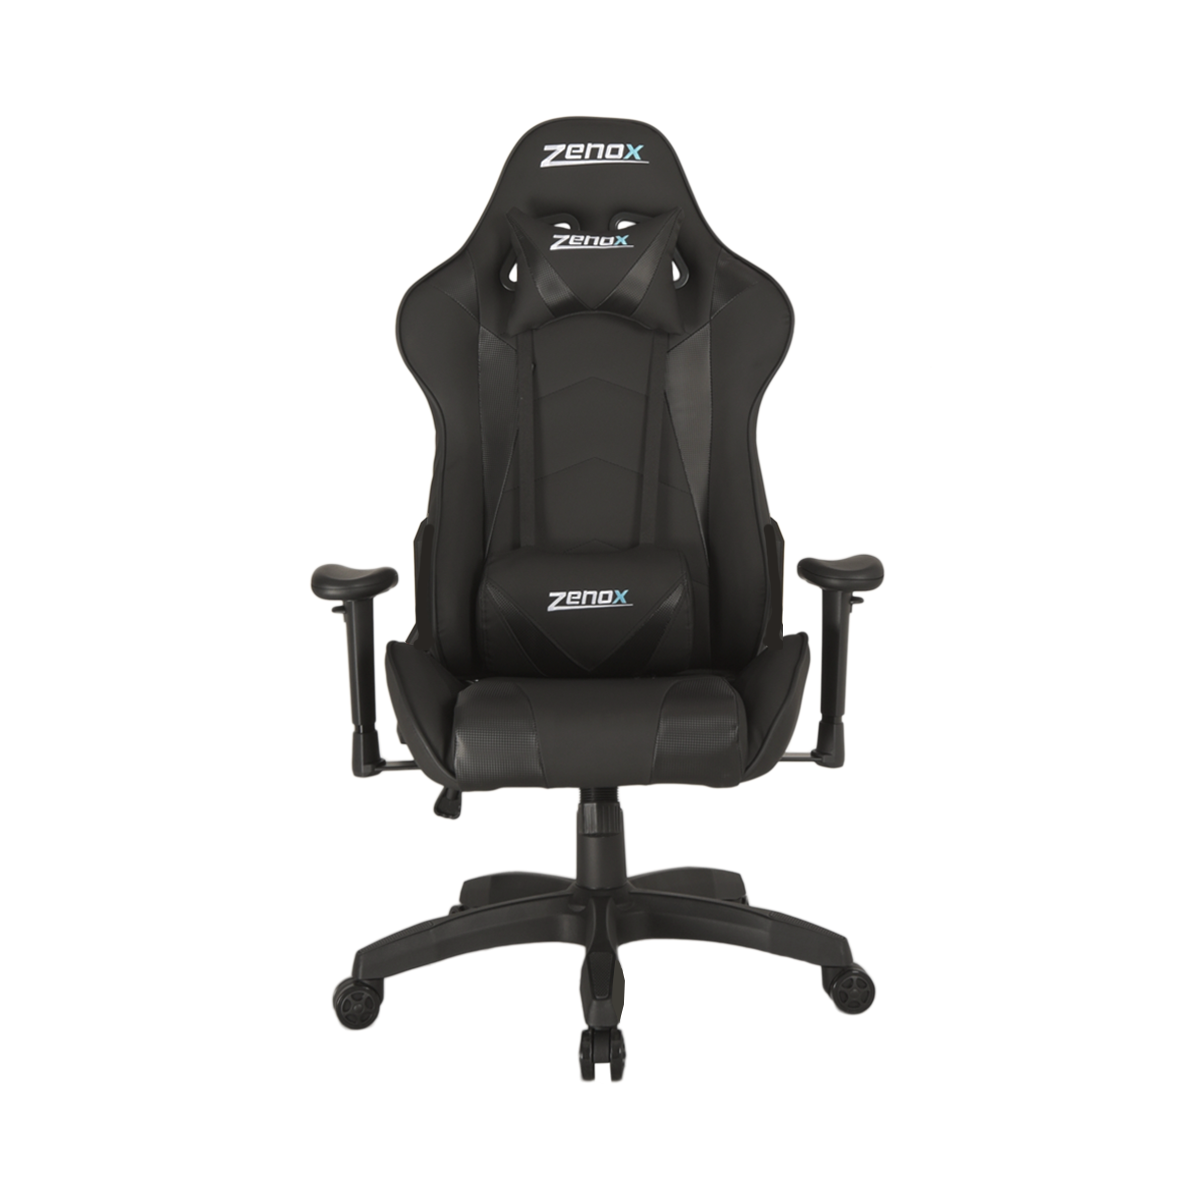 Zenox Saturn Series Racing Chair 電競椅 - Black 黑色